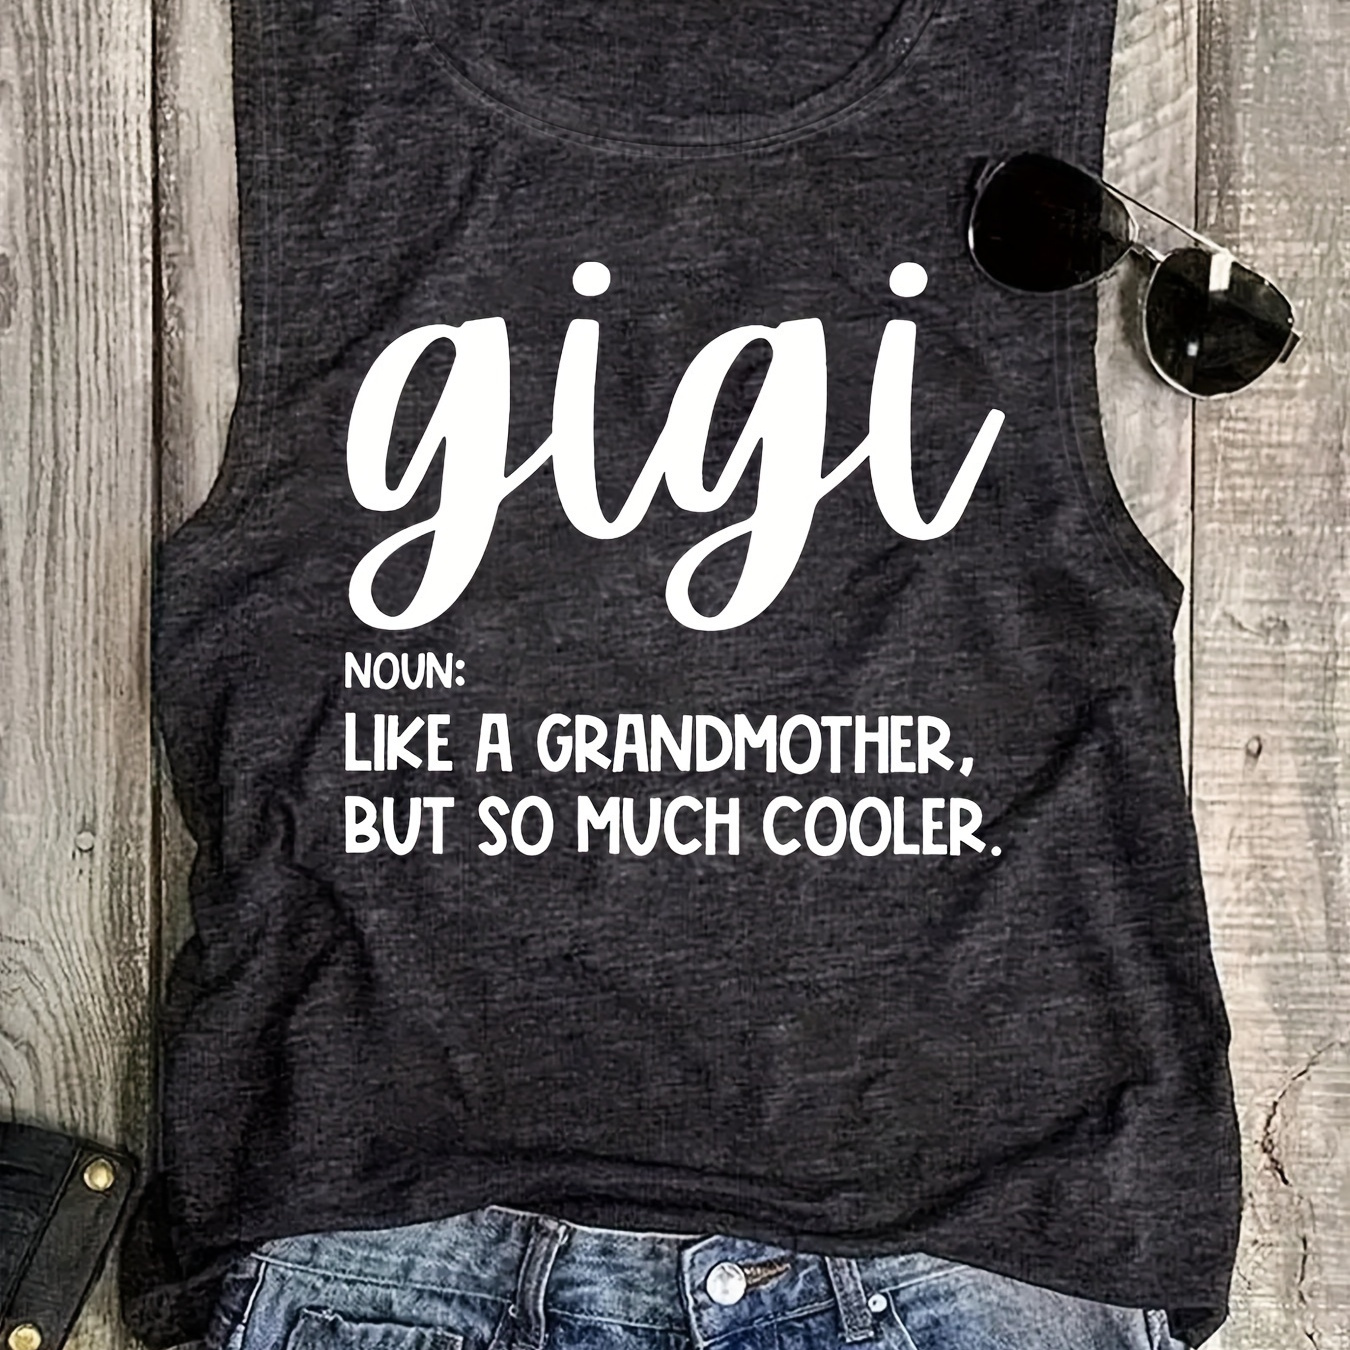 

Gigi Letter Print Tank Top, Sleeveless Casual Top For Summer & Spring, Women's Clothing